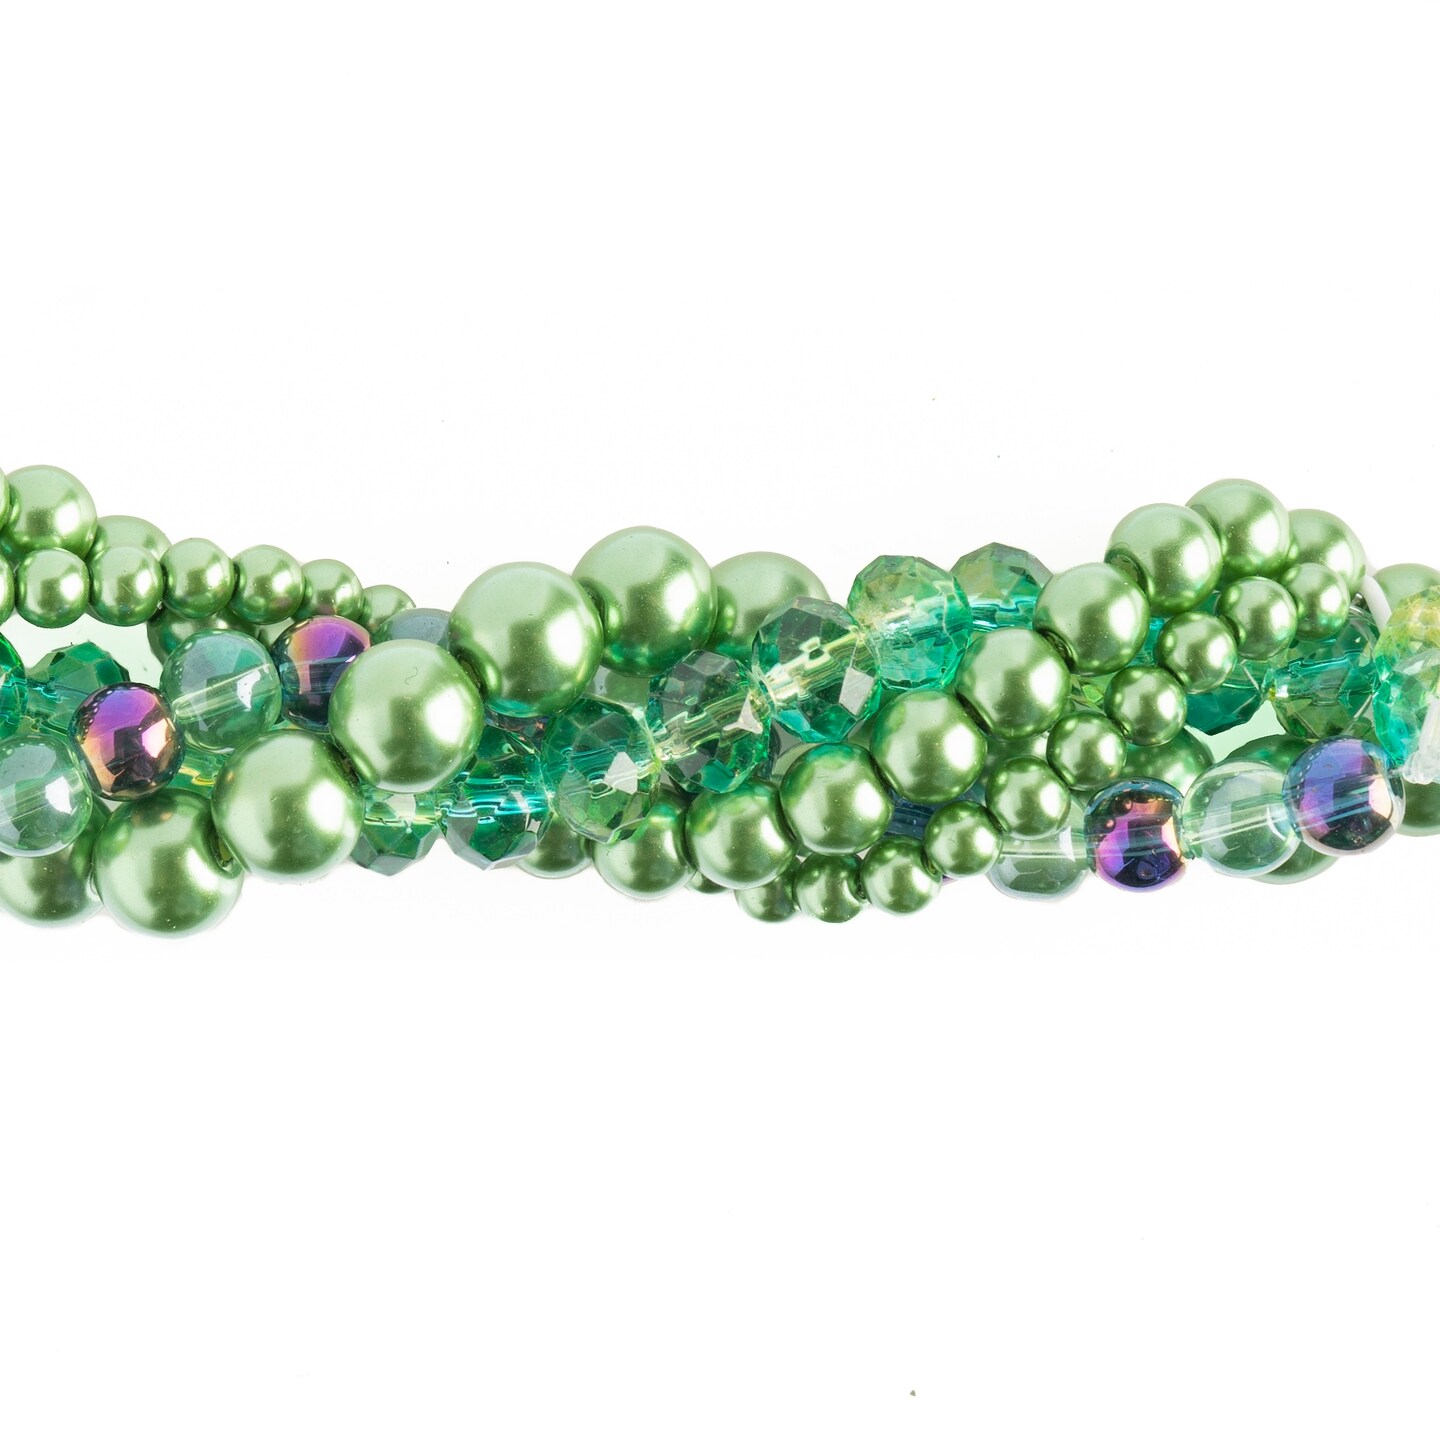 Crystal Lane DIY Green Hydrangea Twisted Glass &#x26; Pearls Beads, 5 Strands